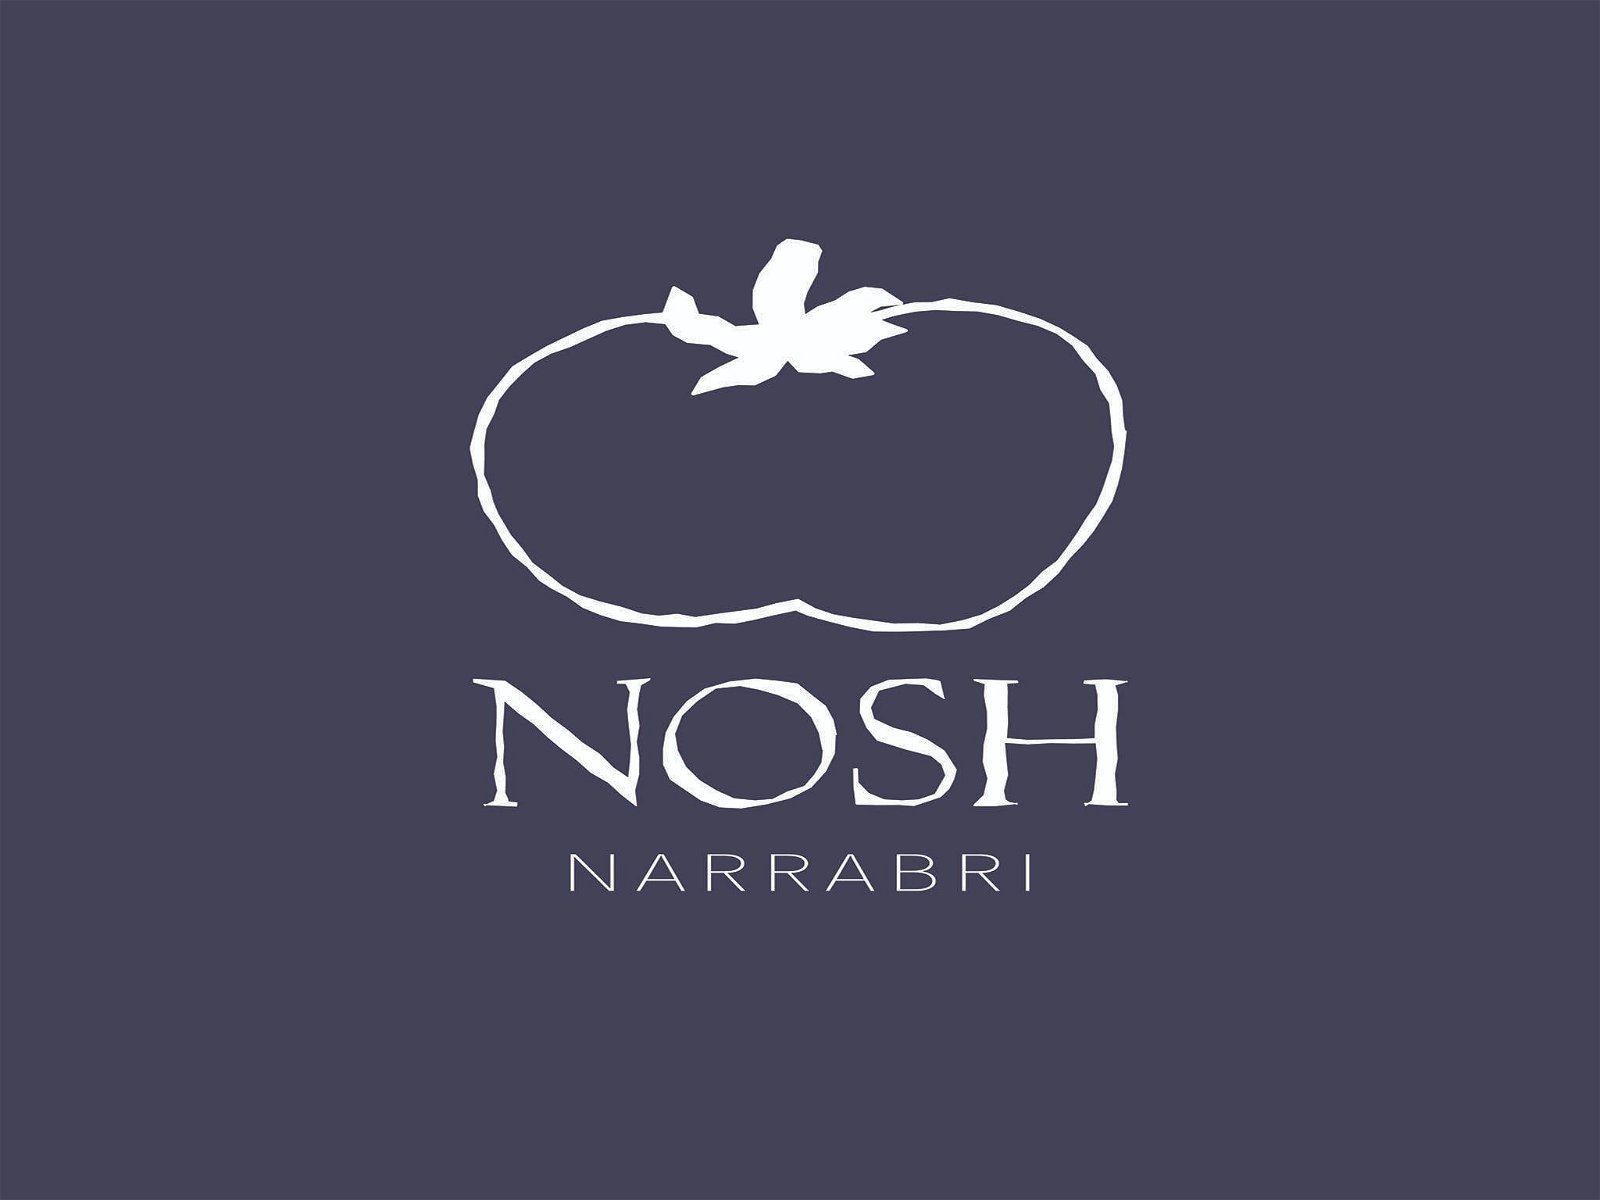 Nosh Narrabri